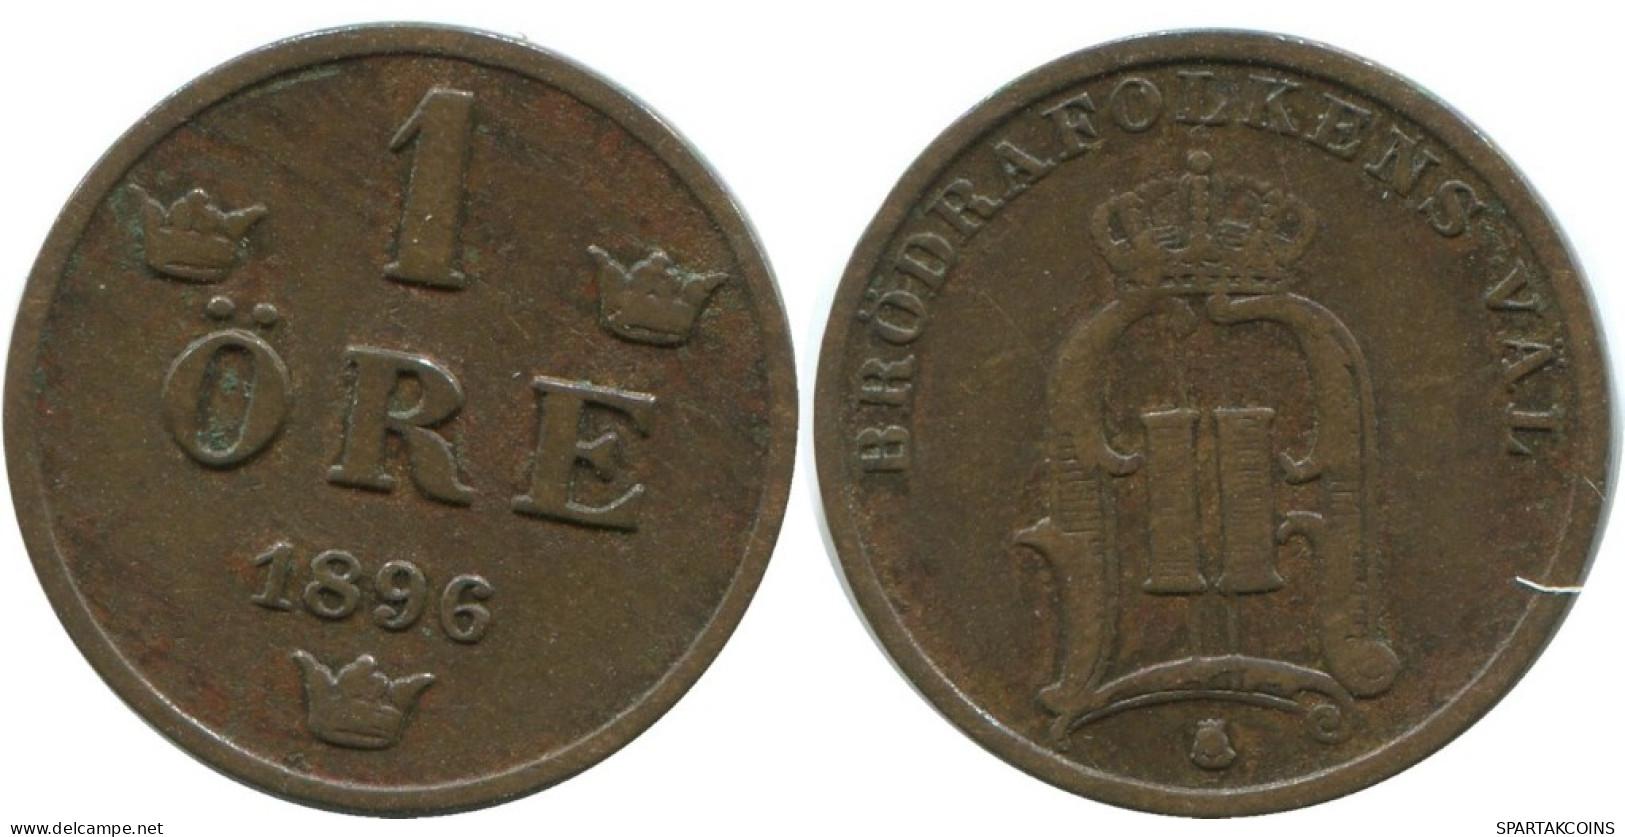 1 ORE 1896 SWEDEN Coin #AD209.2.U.A - Sweden